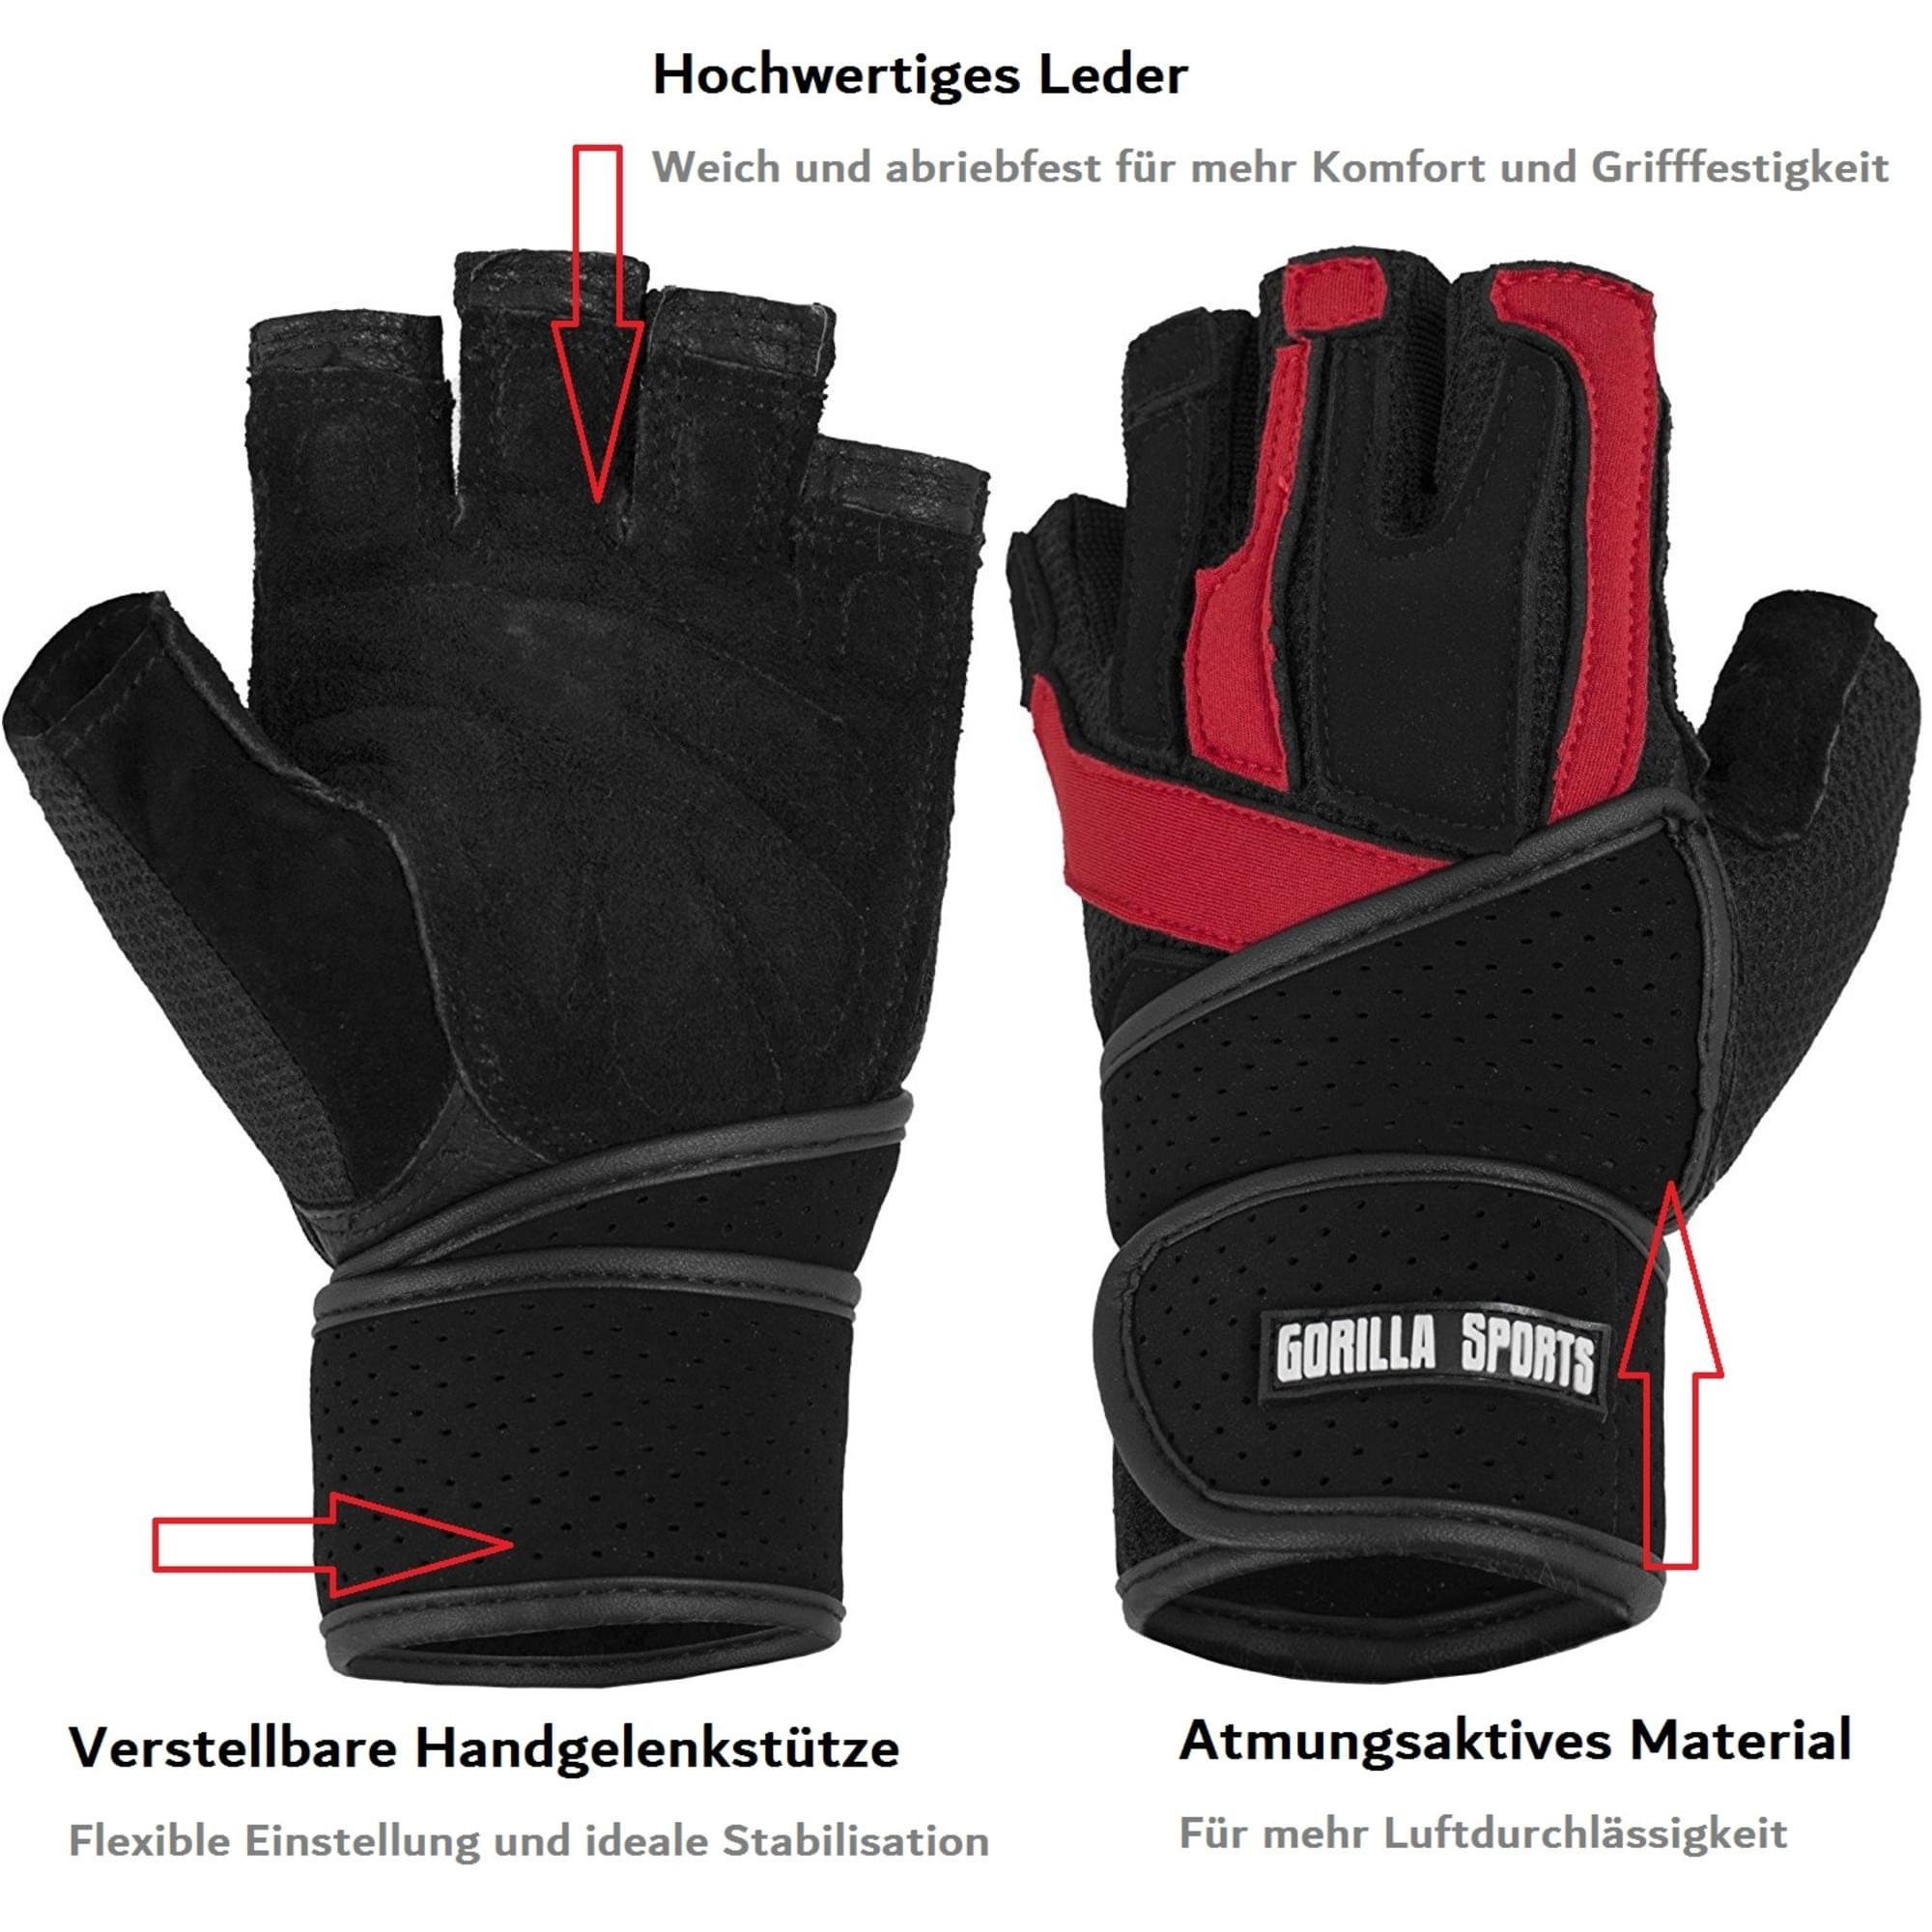 Trainingshandschuhe SPORTS Fitness Handschuhe mit Handgelenkstütze, - GORILLA Sporthandschuhe Leder,